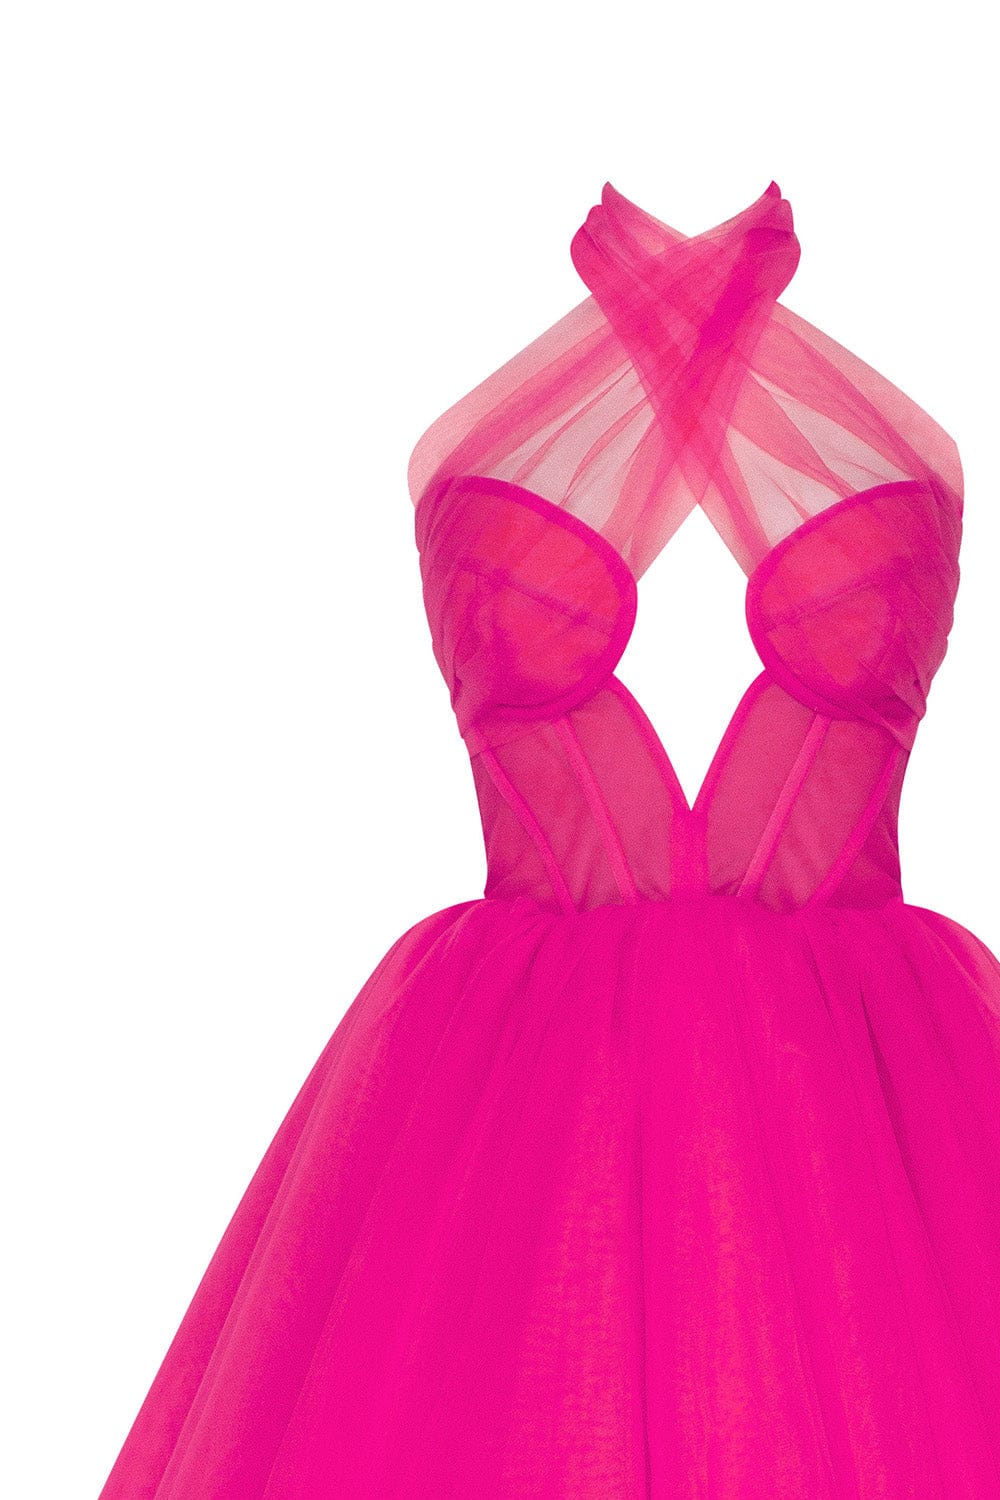 Victoria's Secret Pink Tie-dye Purple Casual Dress Size S - 56% off